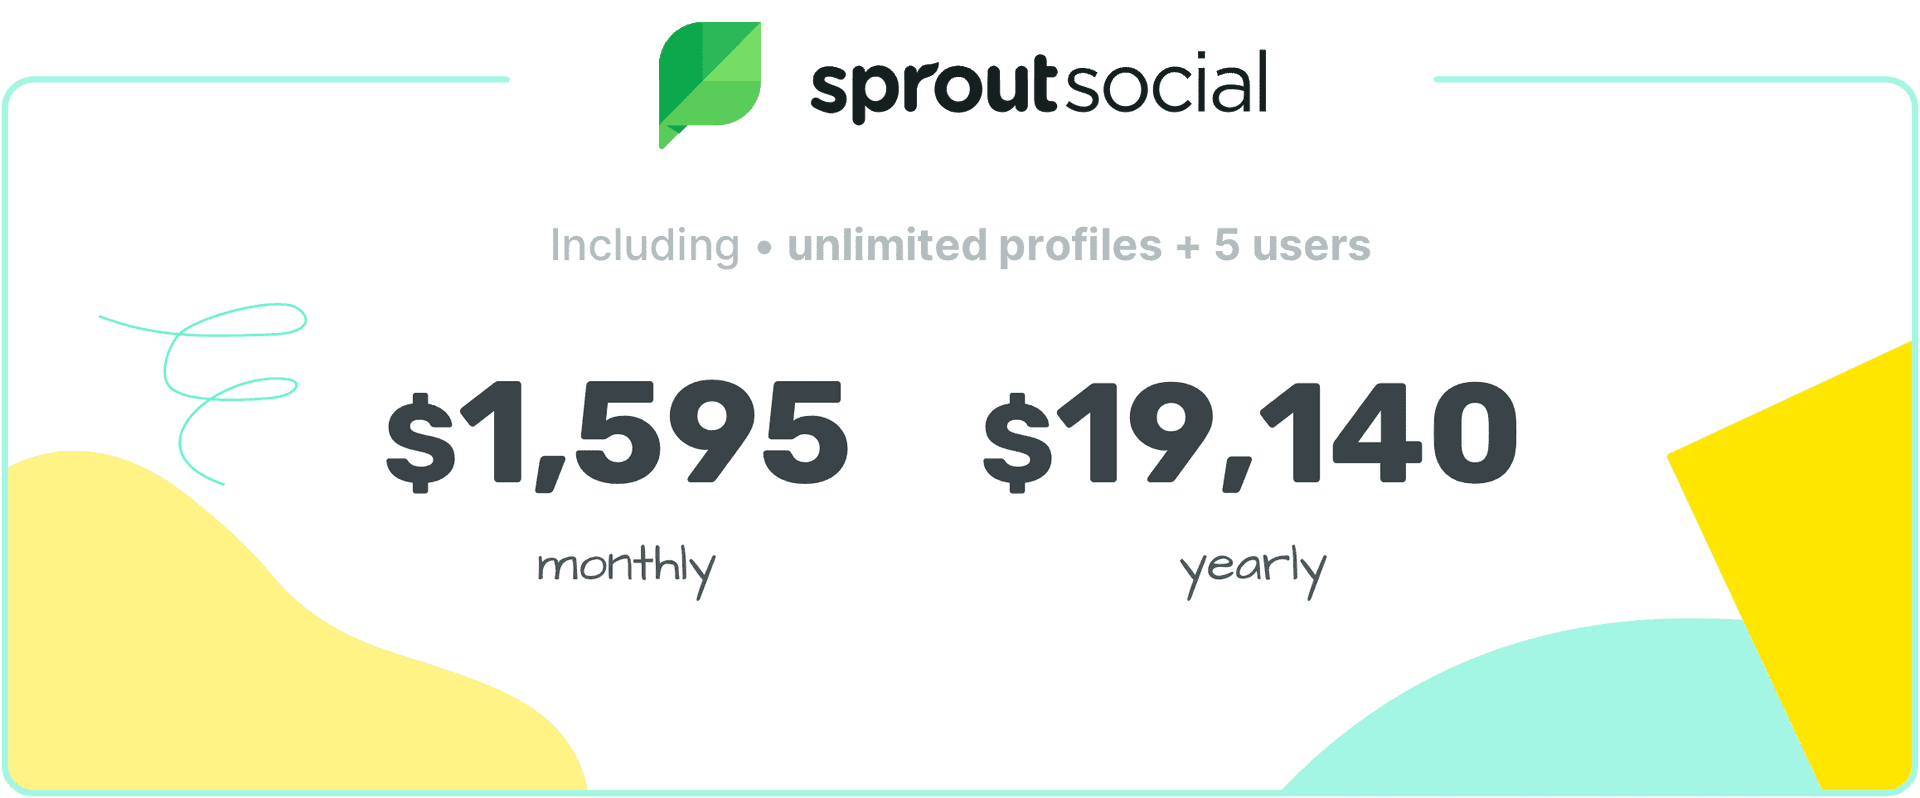 Social media management tools - Sprout Social